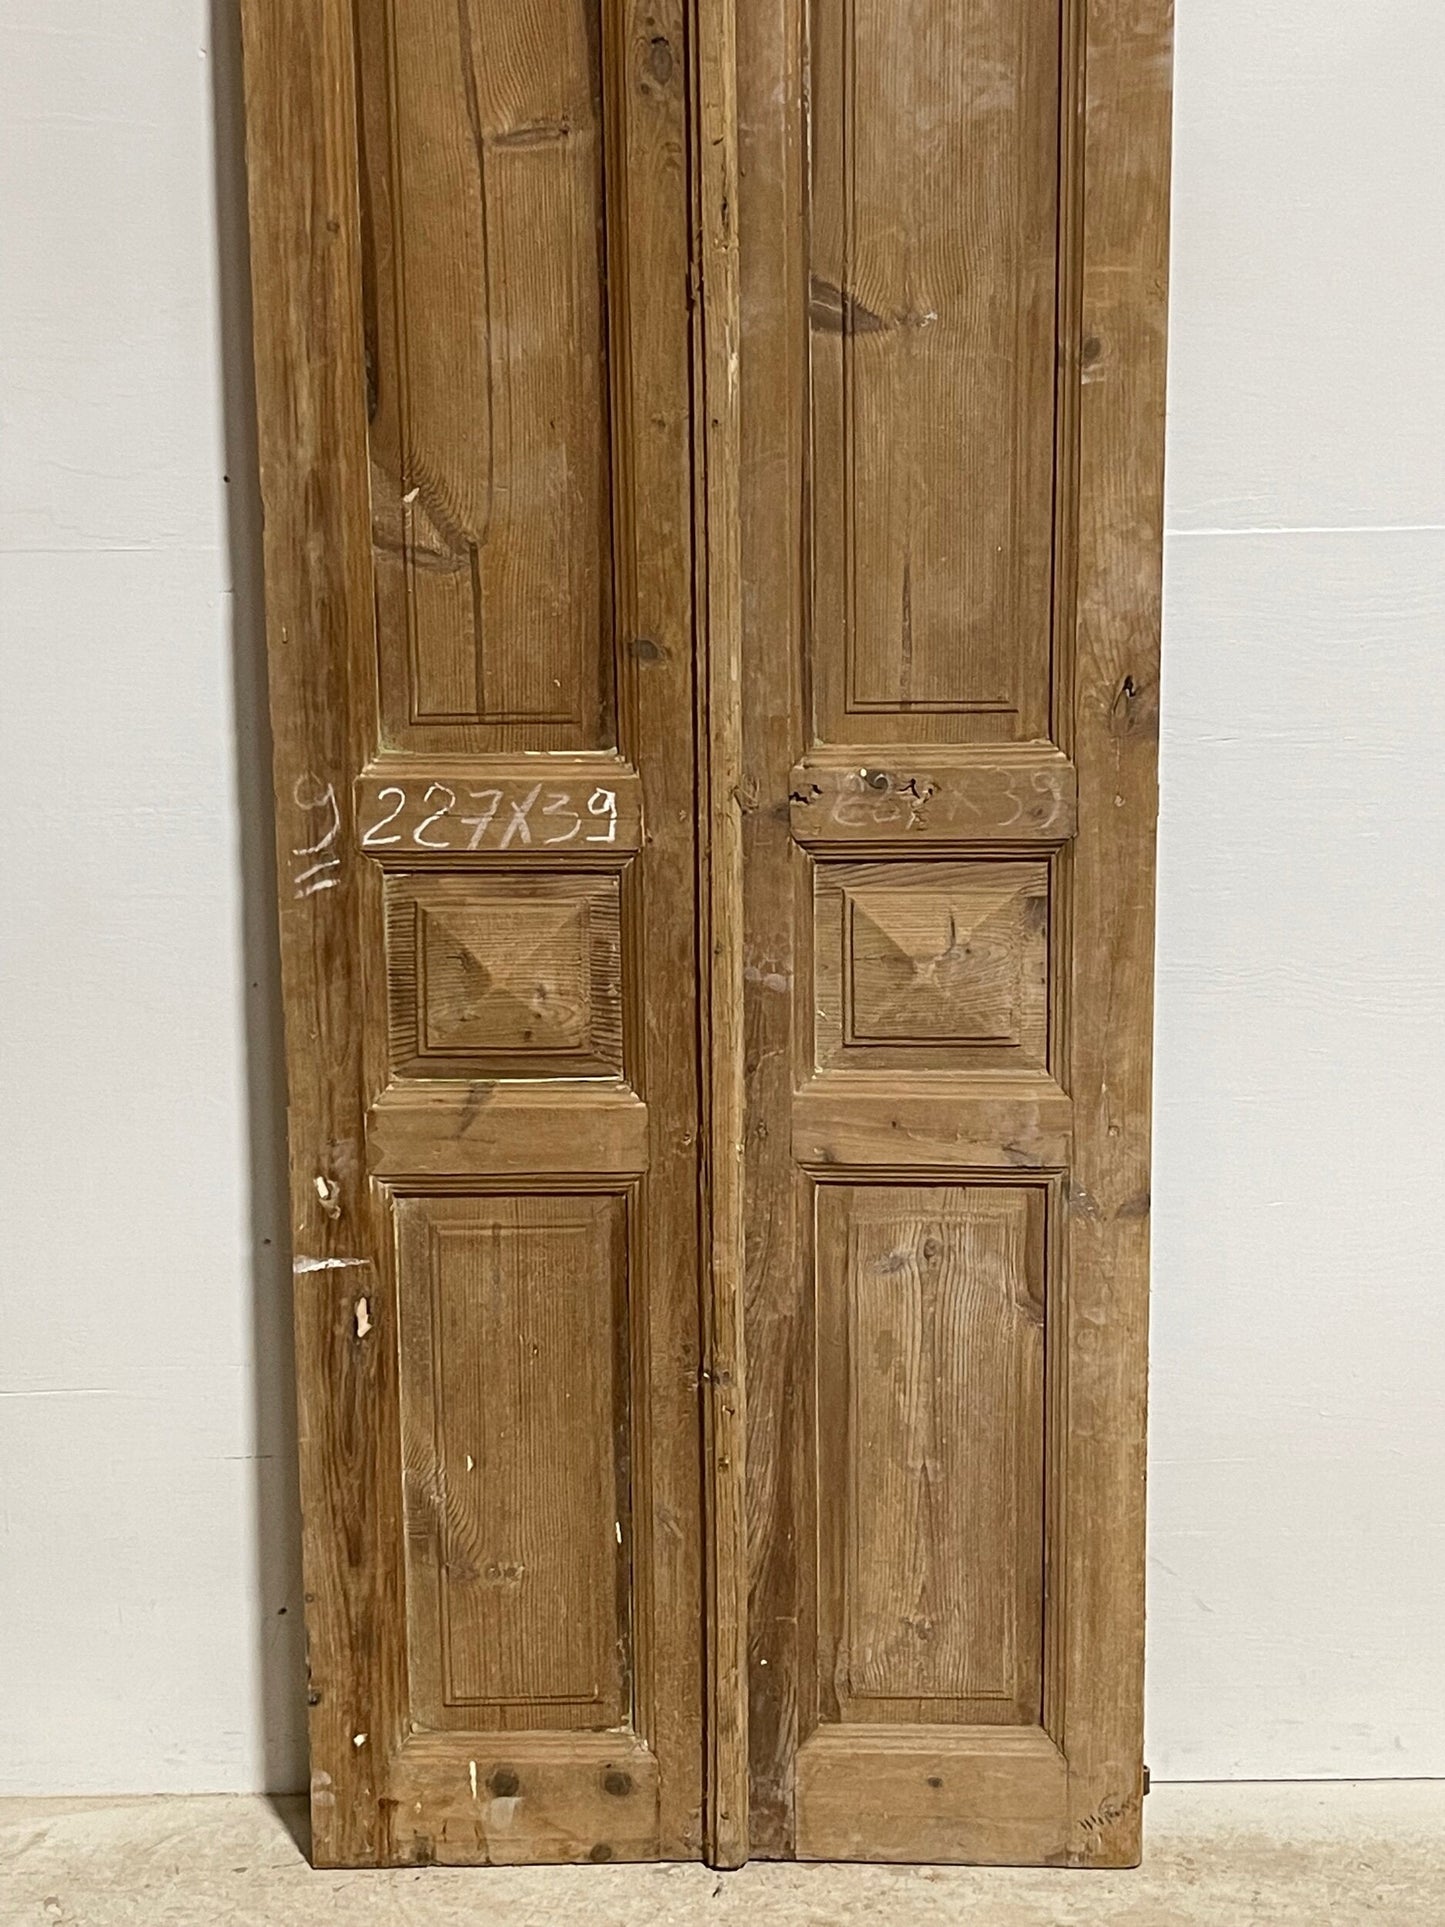 Antique French doors (89.75x30.75) H0207s